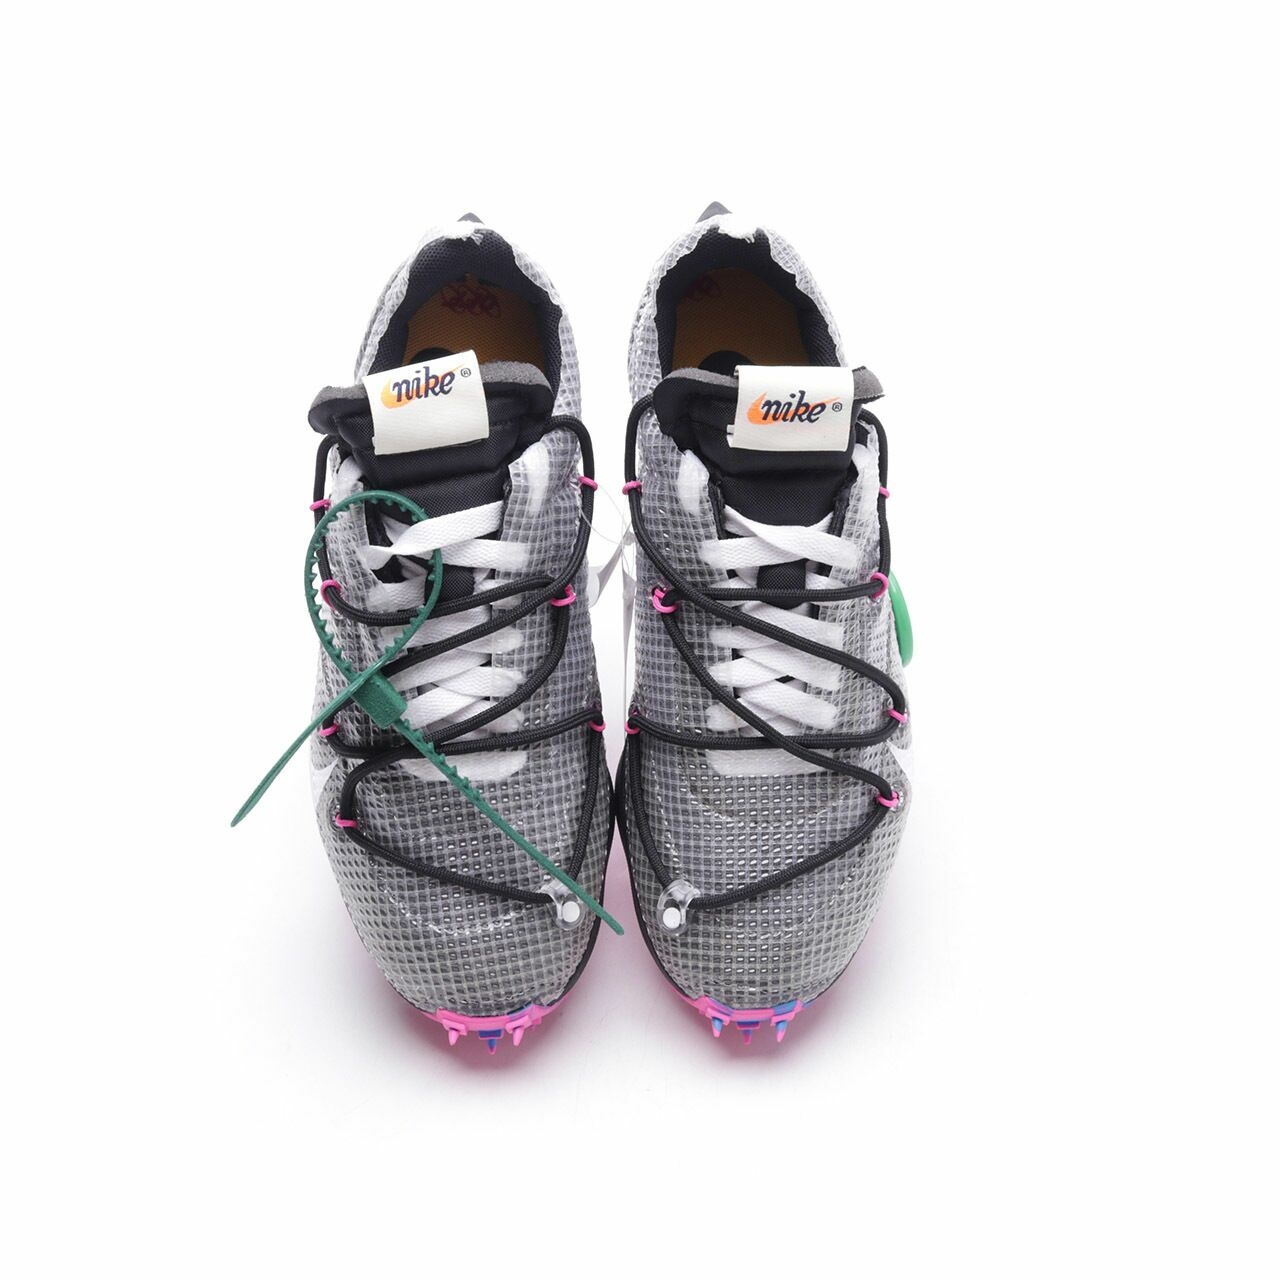 Nike Vapor Street Off-white Black Laser Fuchsia Sneakers